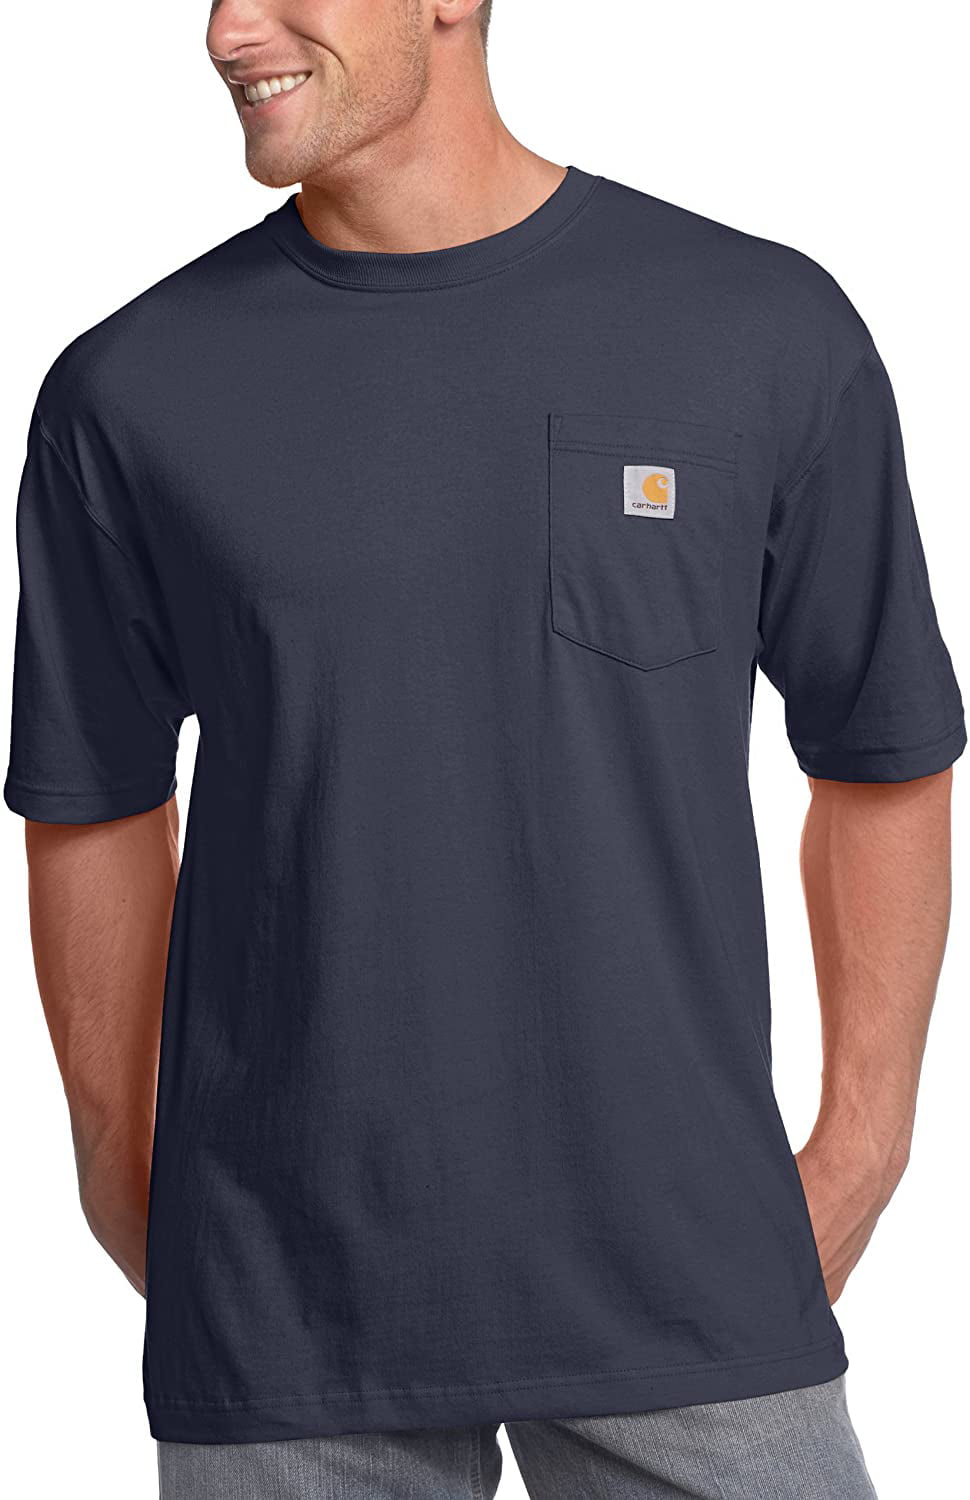 Regular and Big & Tall Sizes Carhartt K87-BLK Men's K87 Workwear Pocket Short Sleeve T-Shirt for sale online 